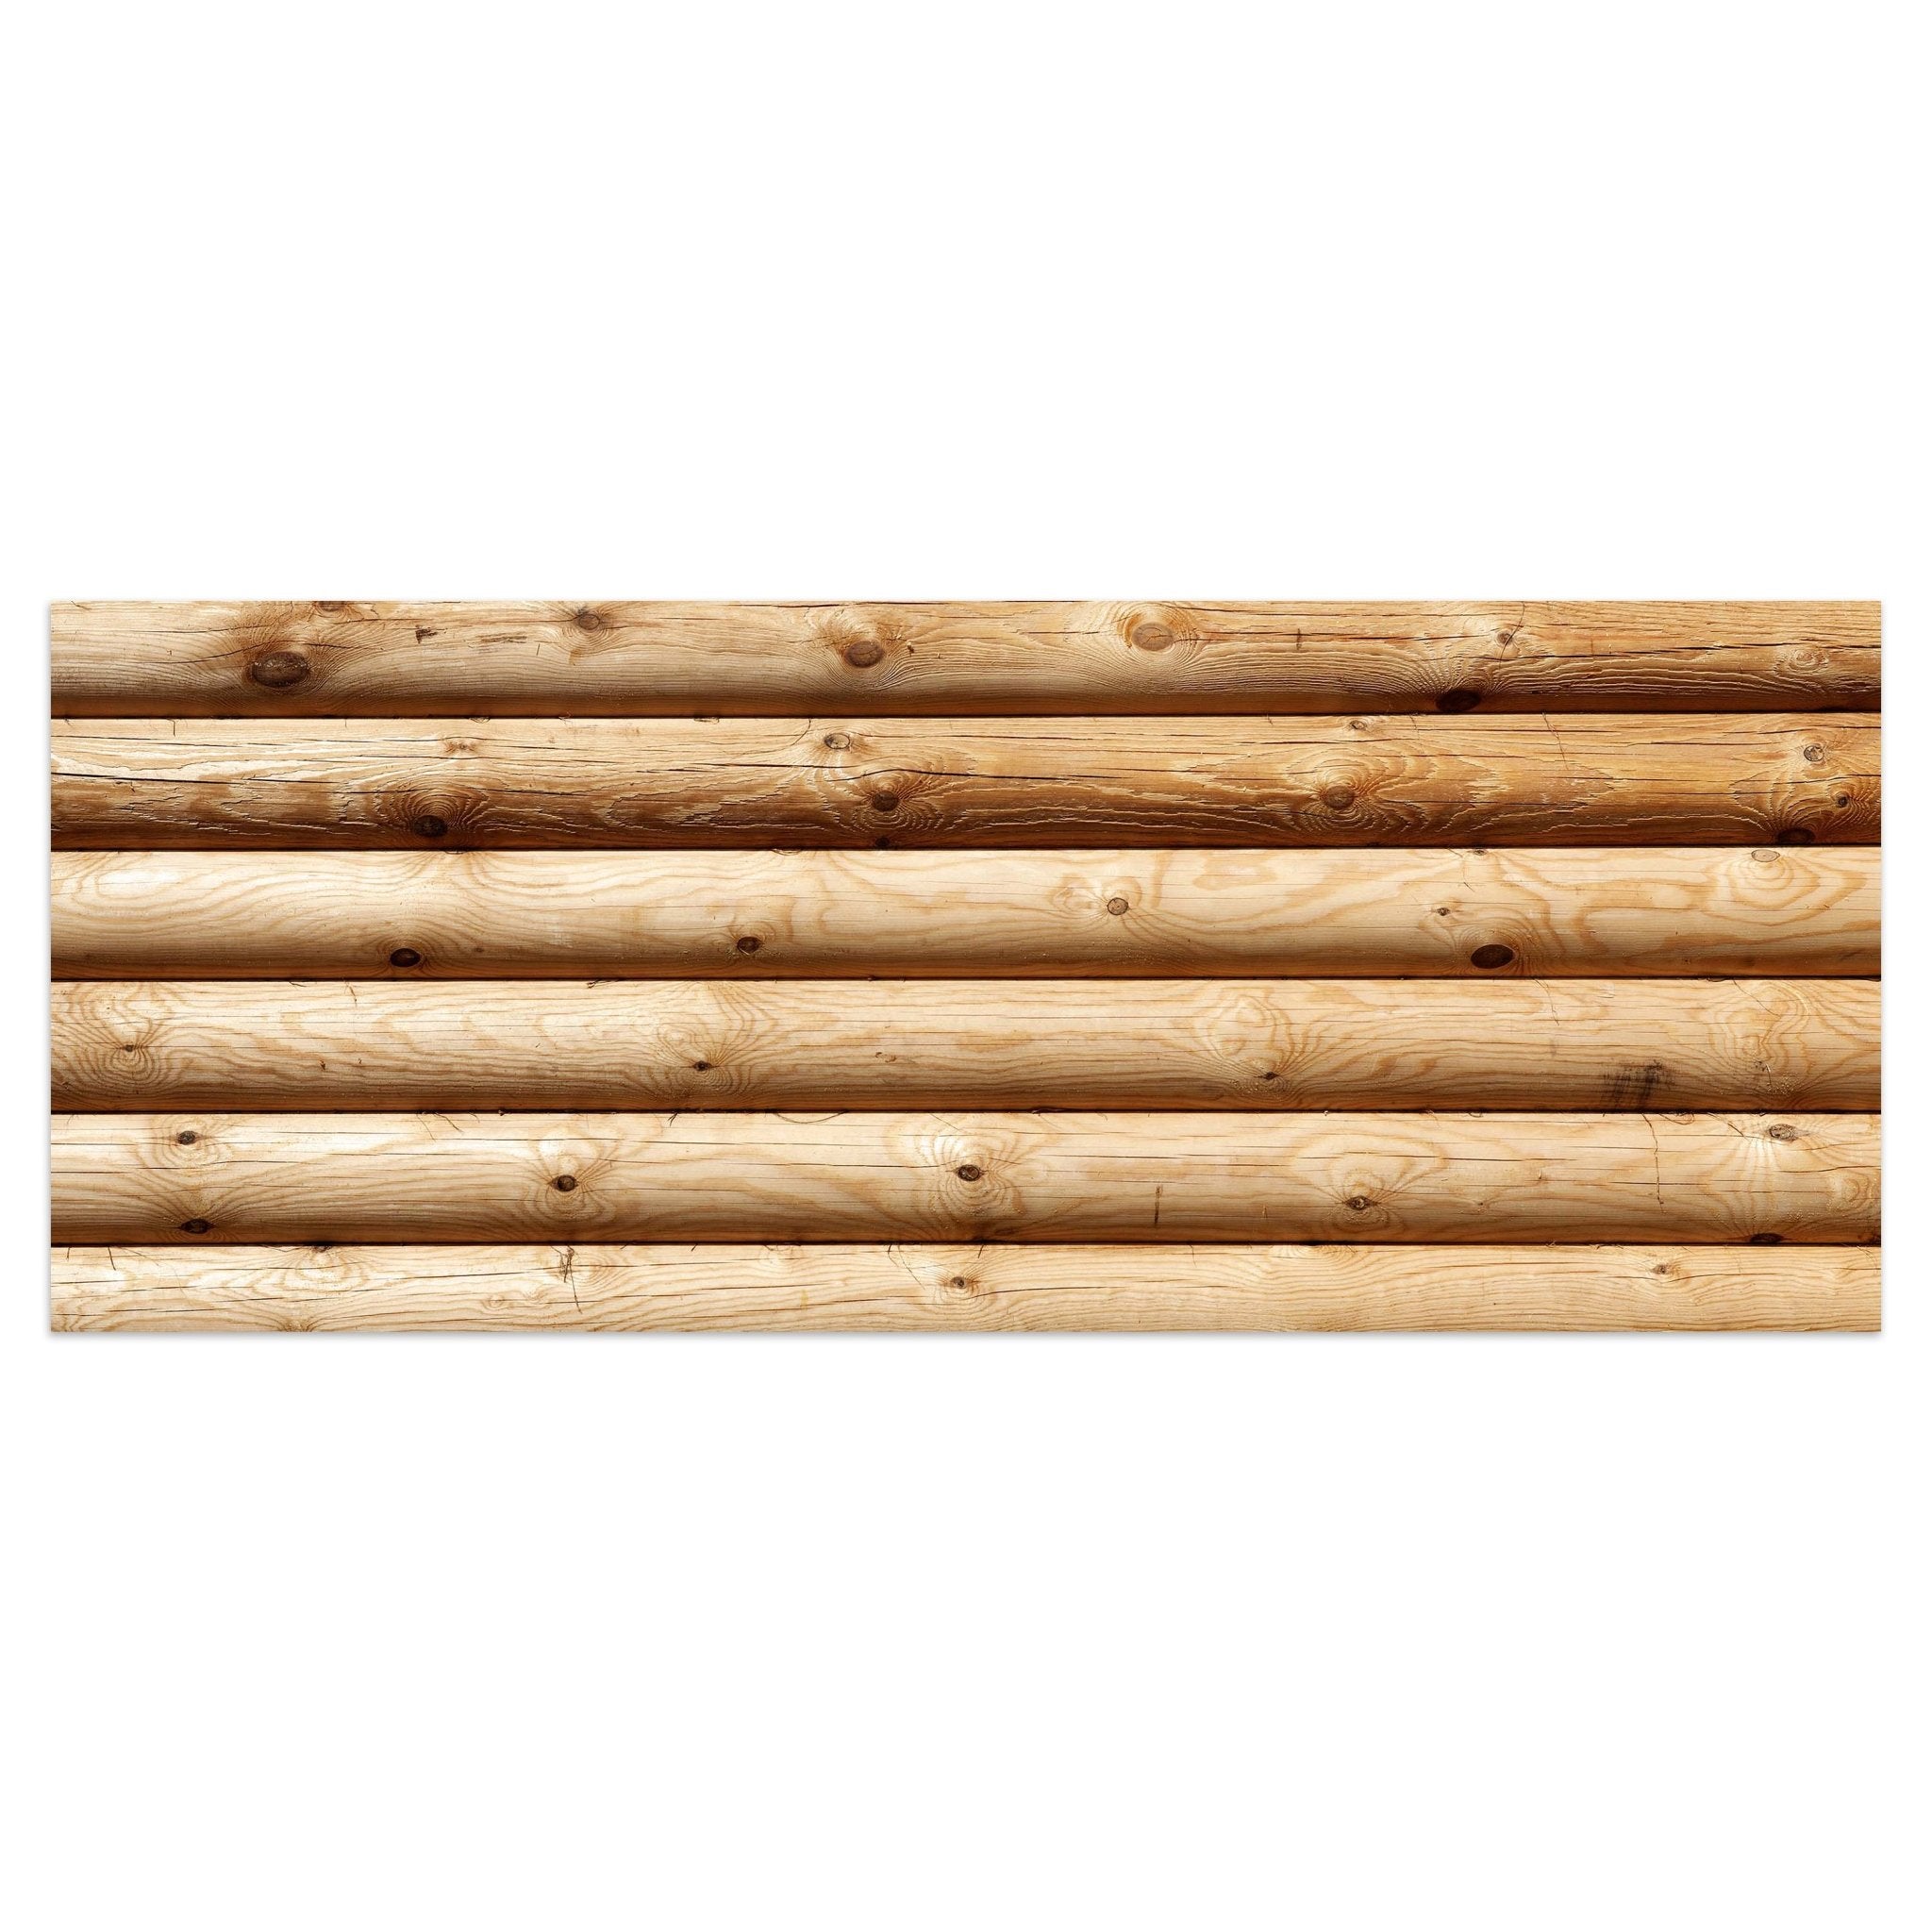 Leinwandbild Rustik Holzwand M0704 kaufen - Bild 1